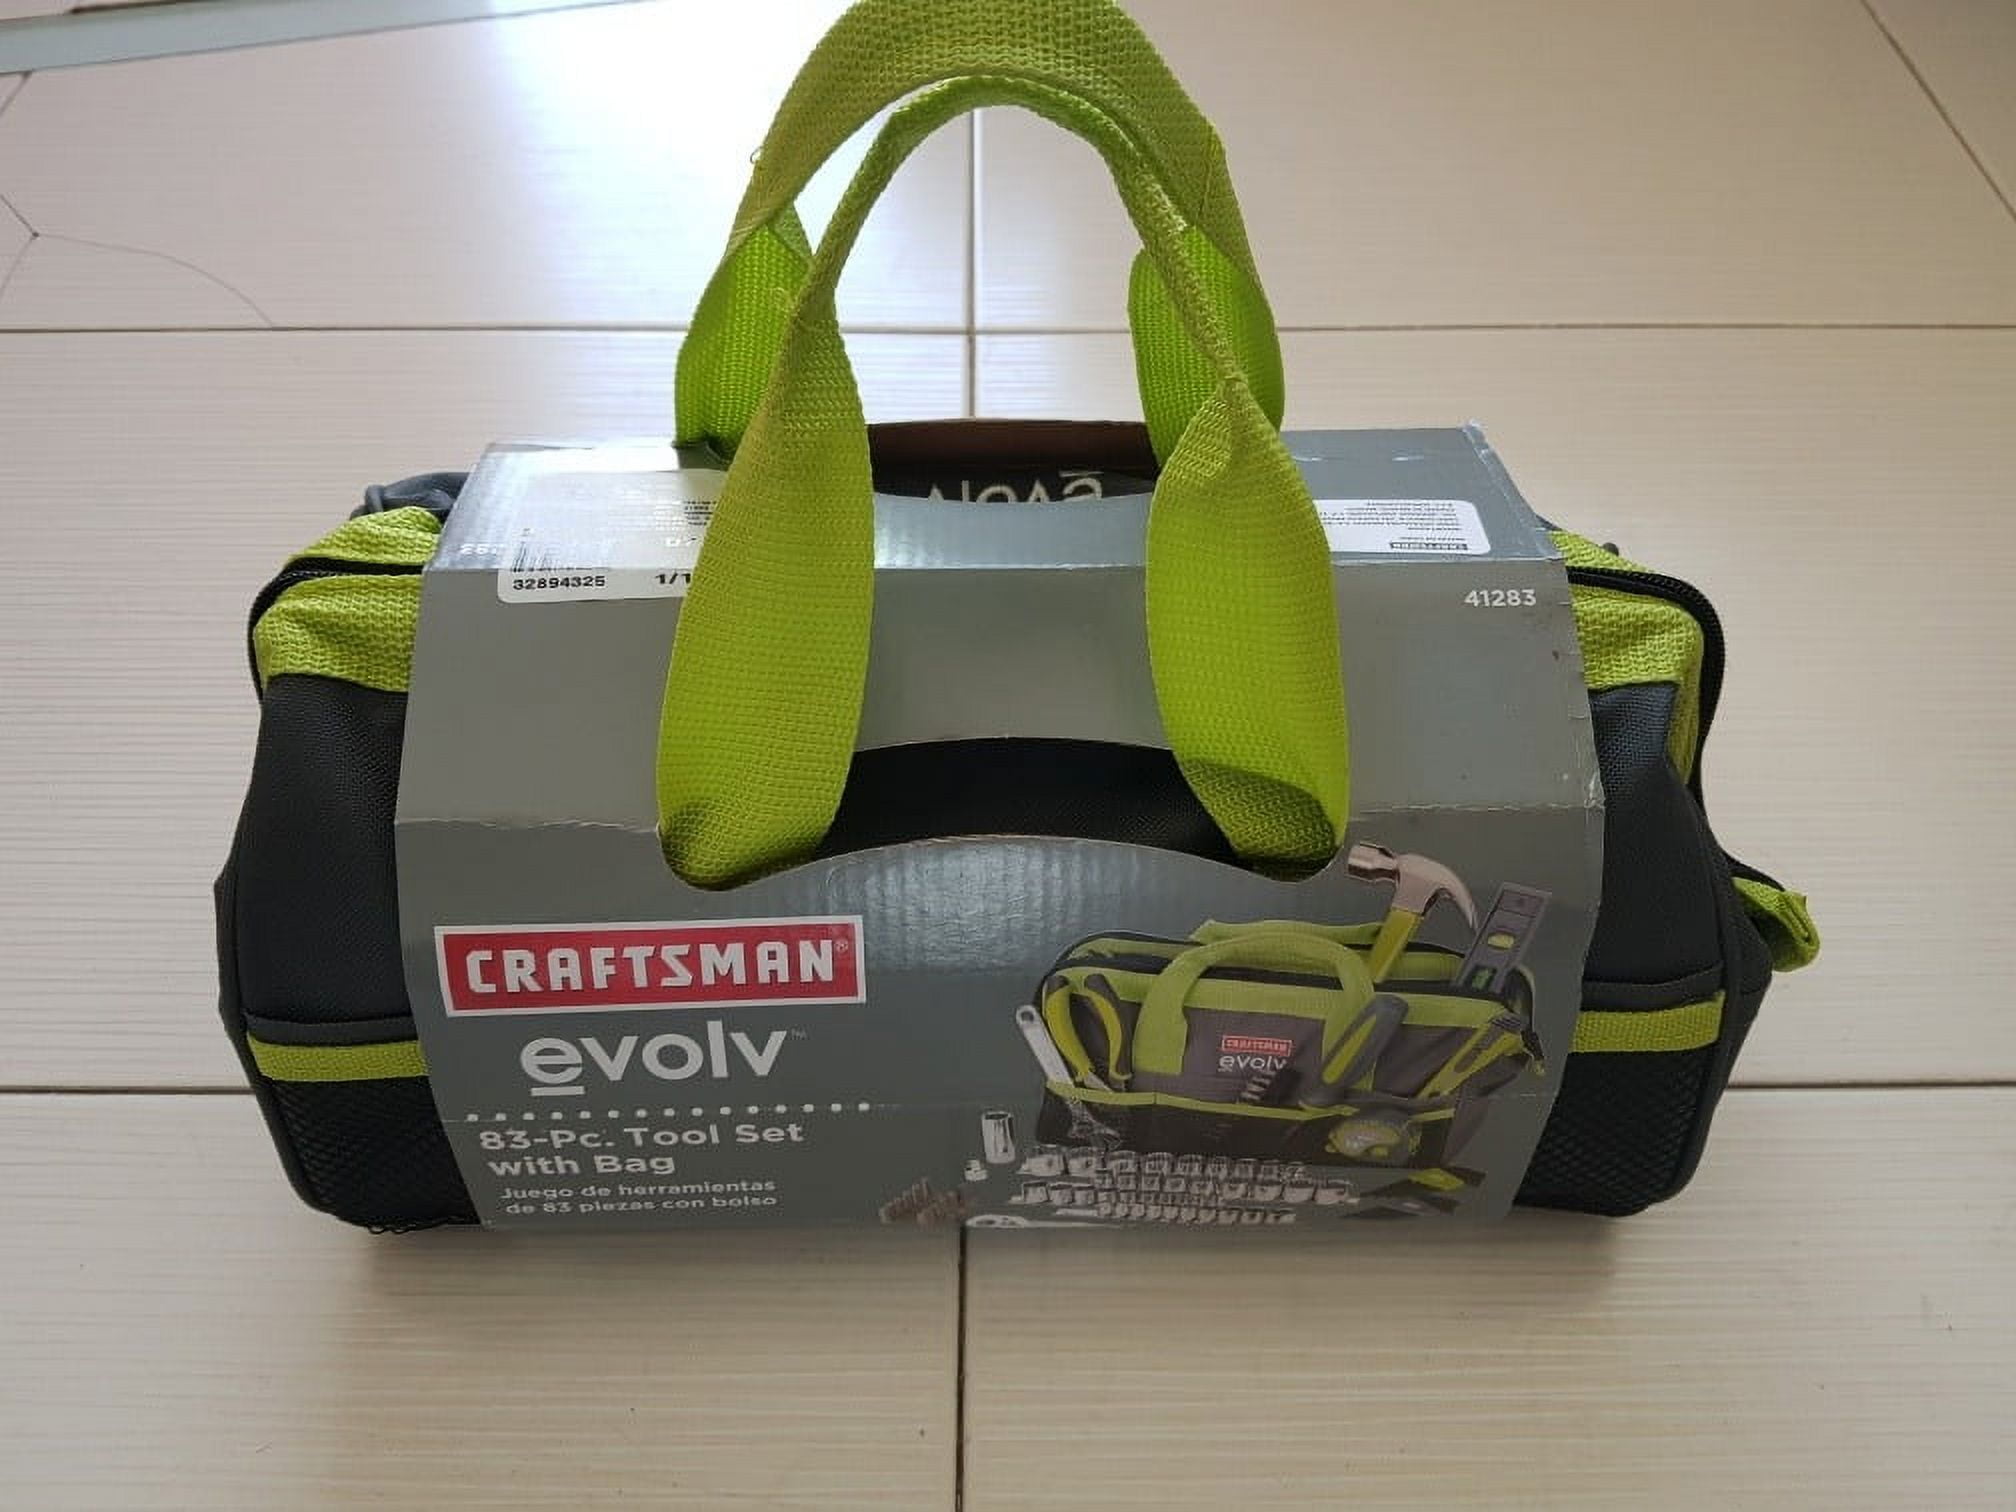 Craftsman Evolv 83 Pc. Homeowner Tool Set W/bag (41283)